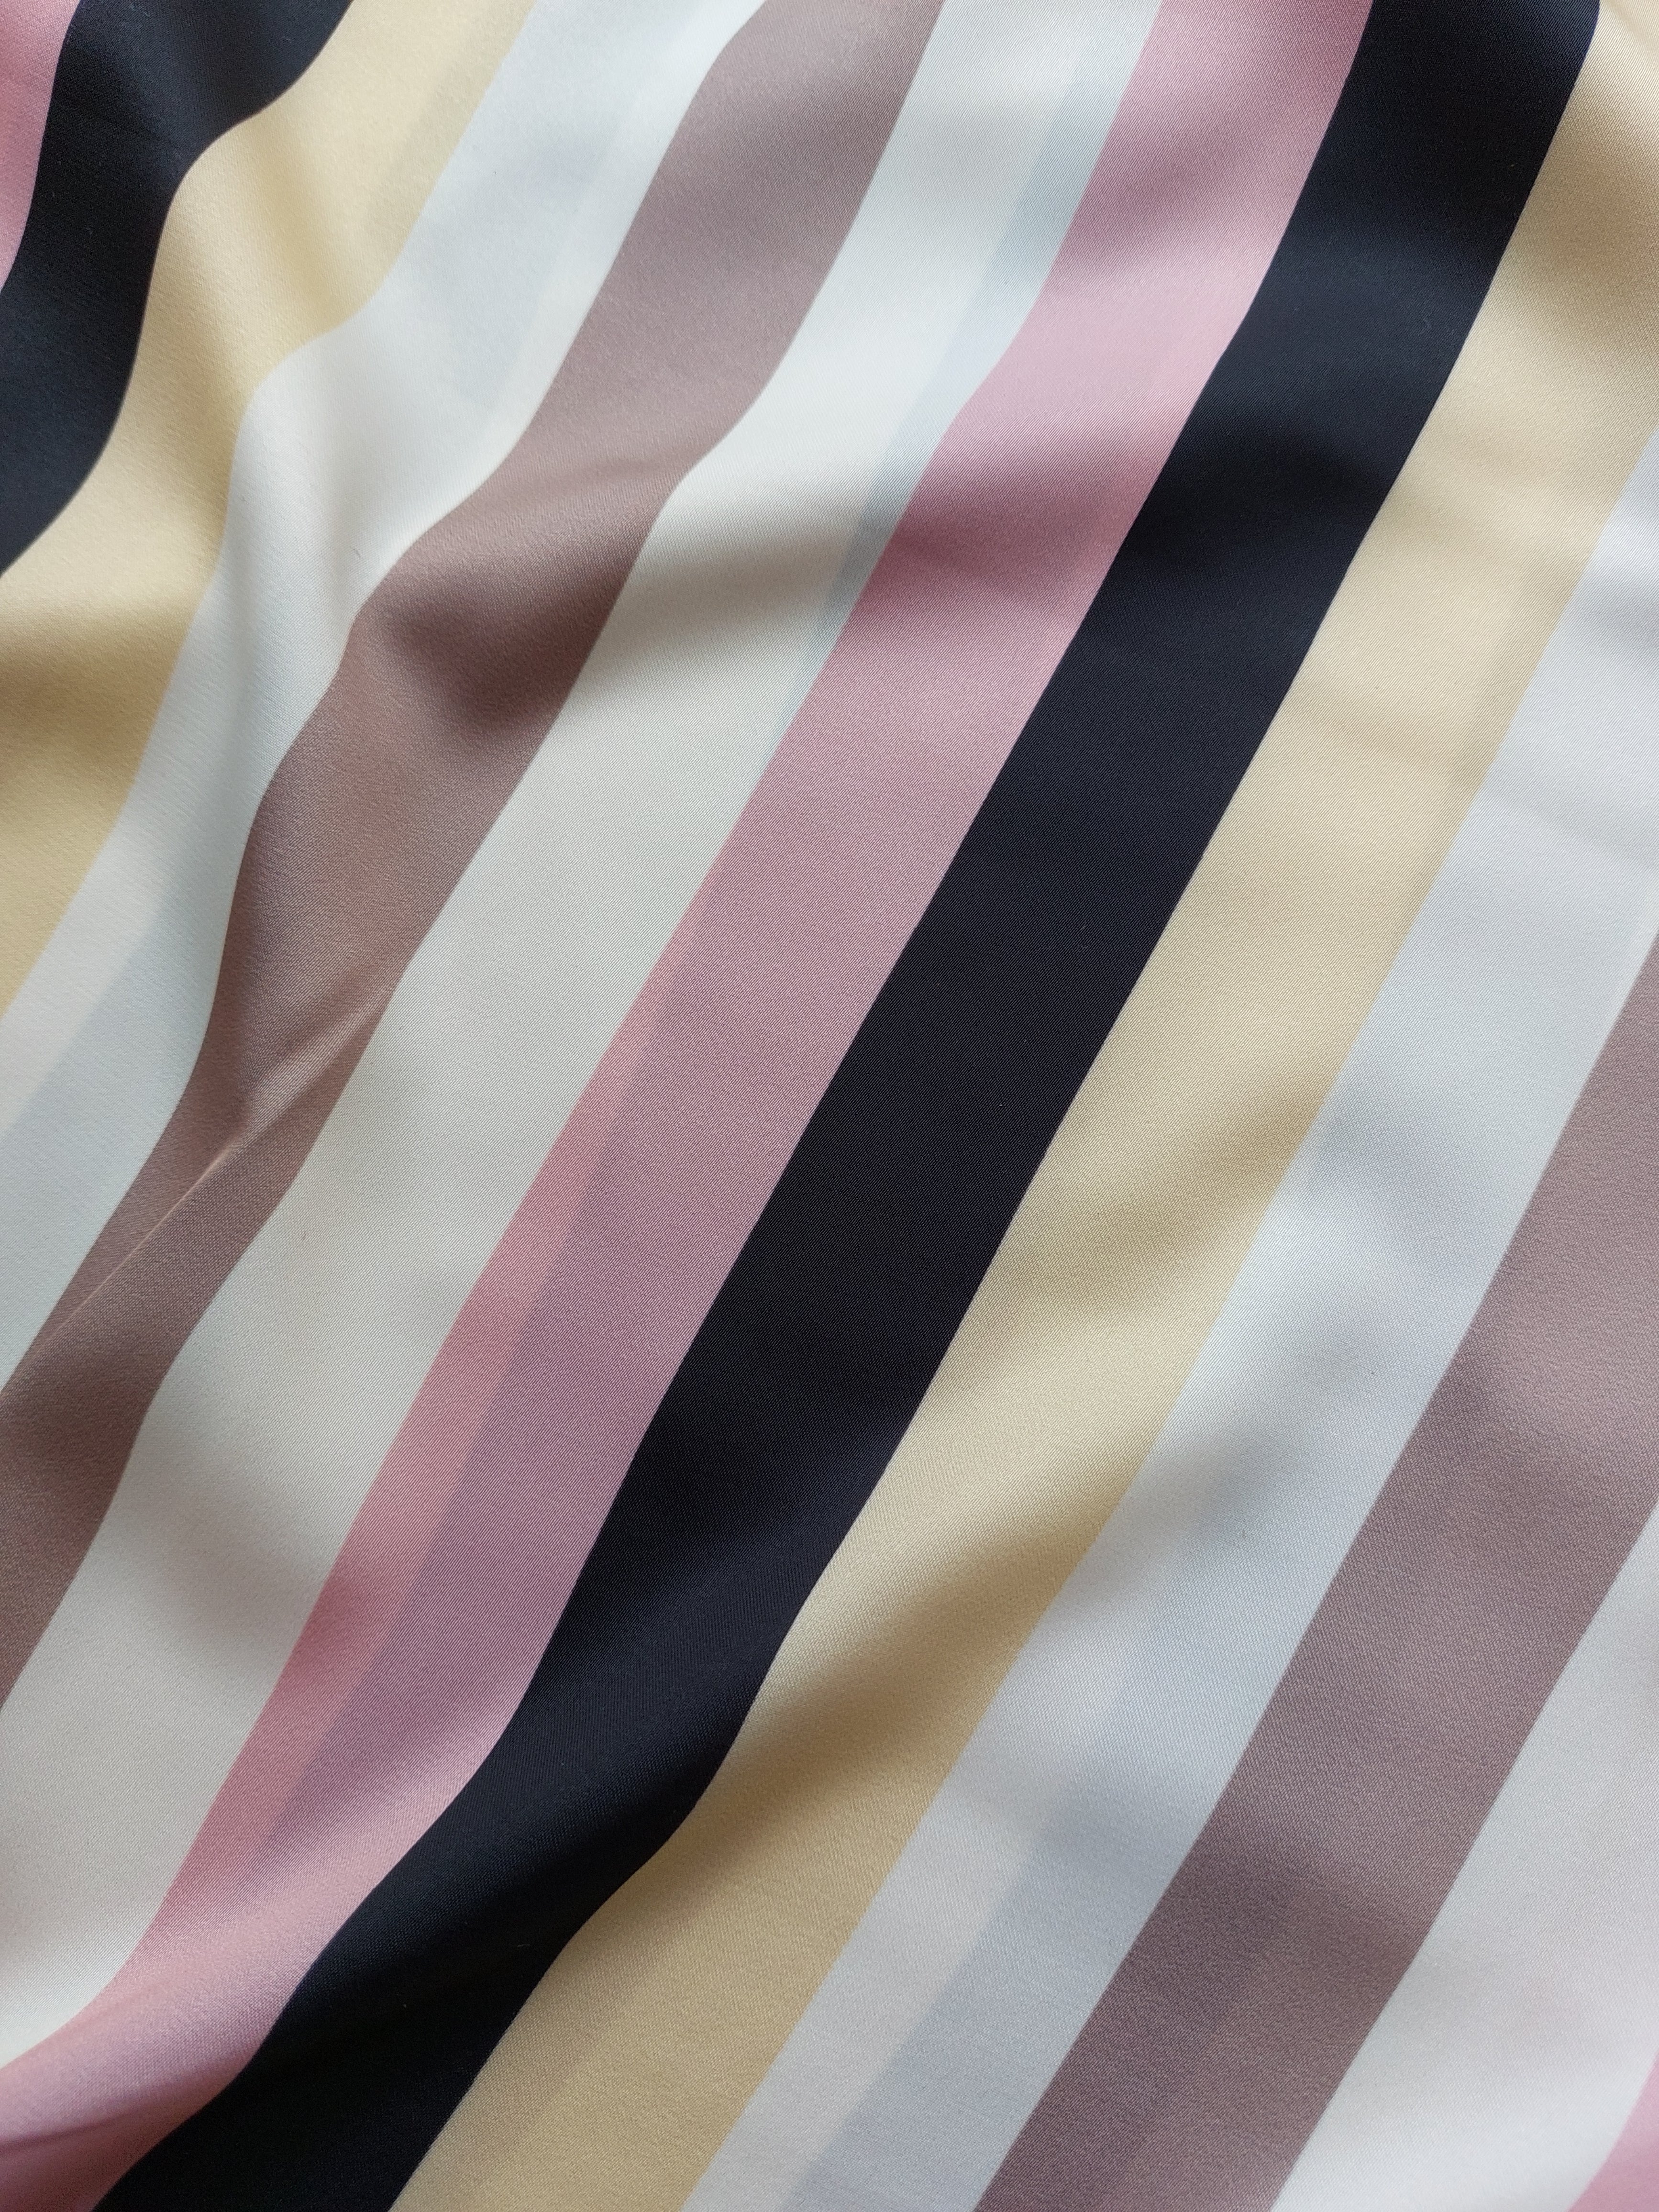 Stripes Digital Printed Modal Satin Fabric. Fabric Stripes Digital Printed Modal Satin Fabric. Fabric 